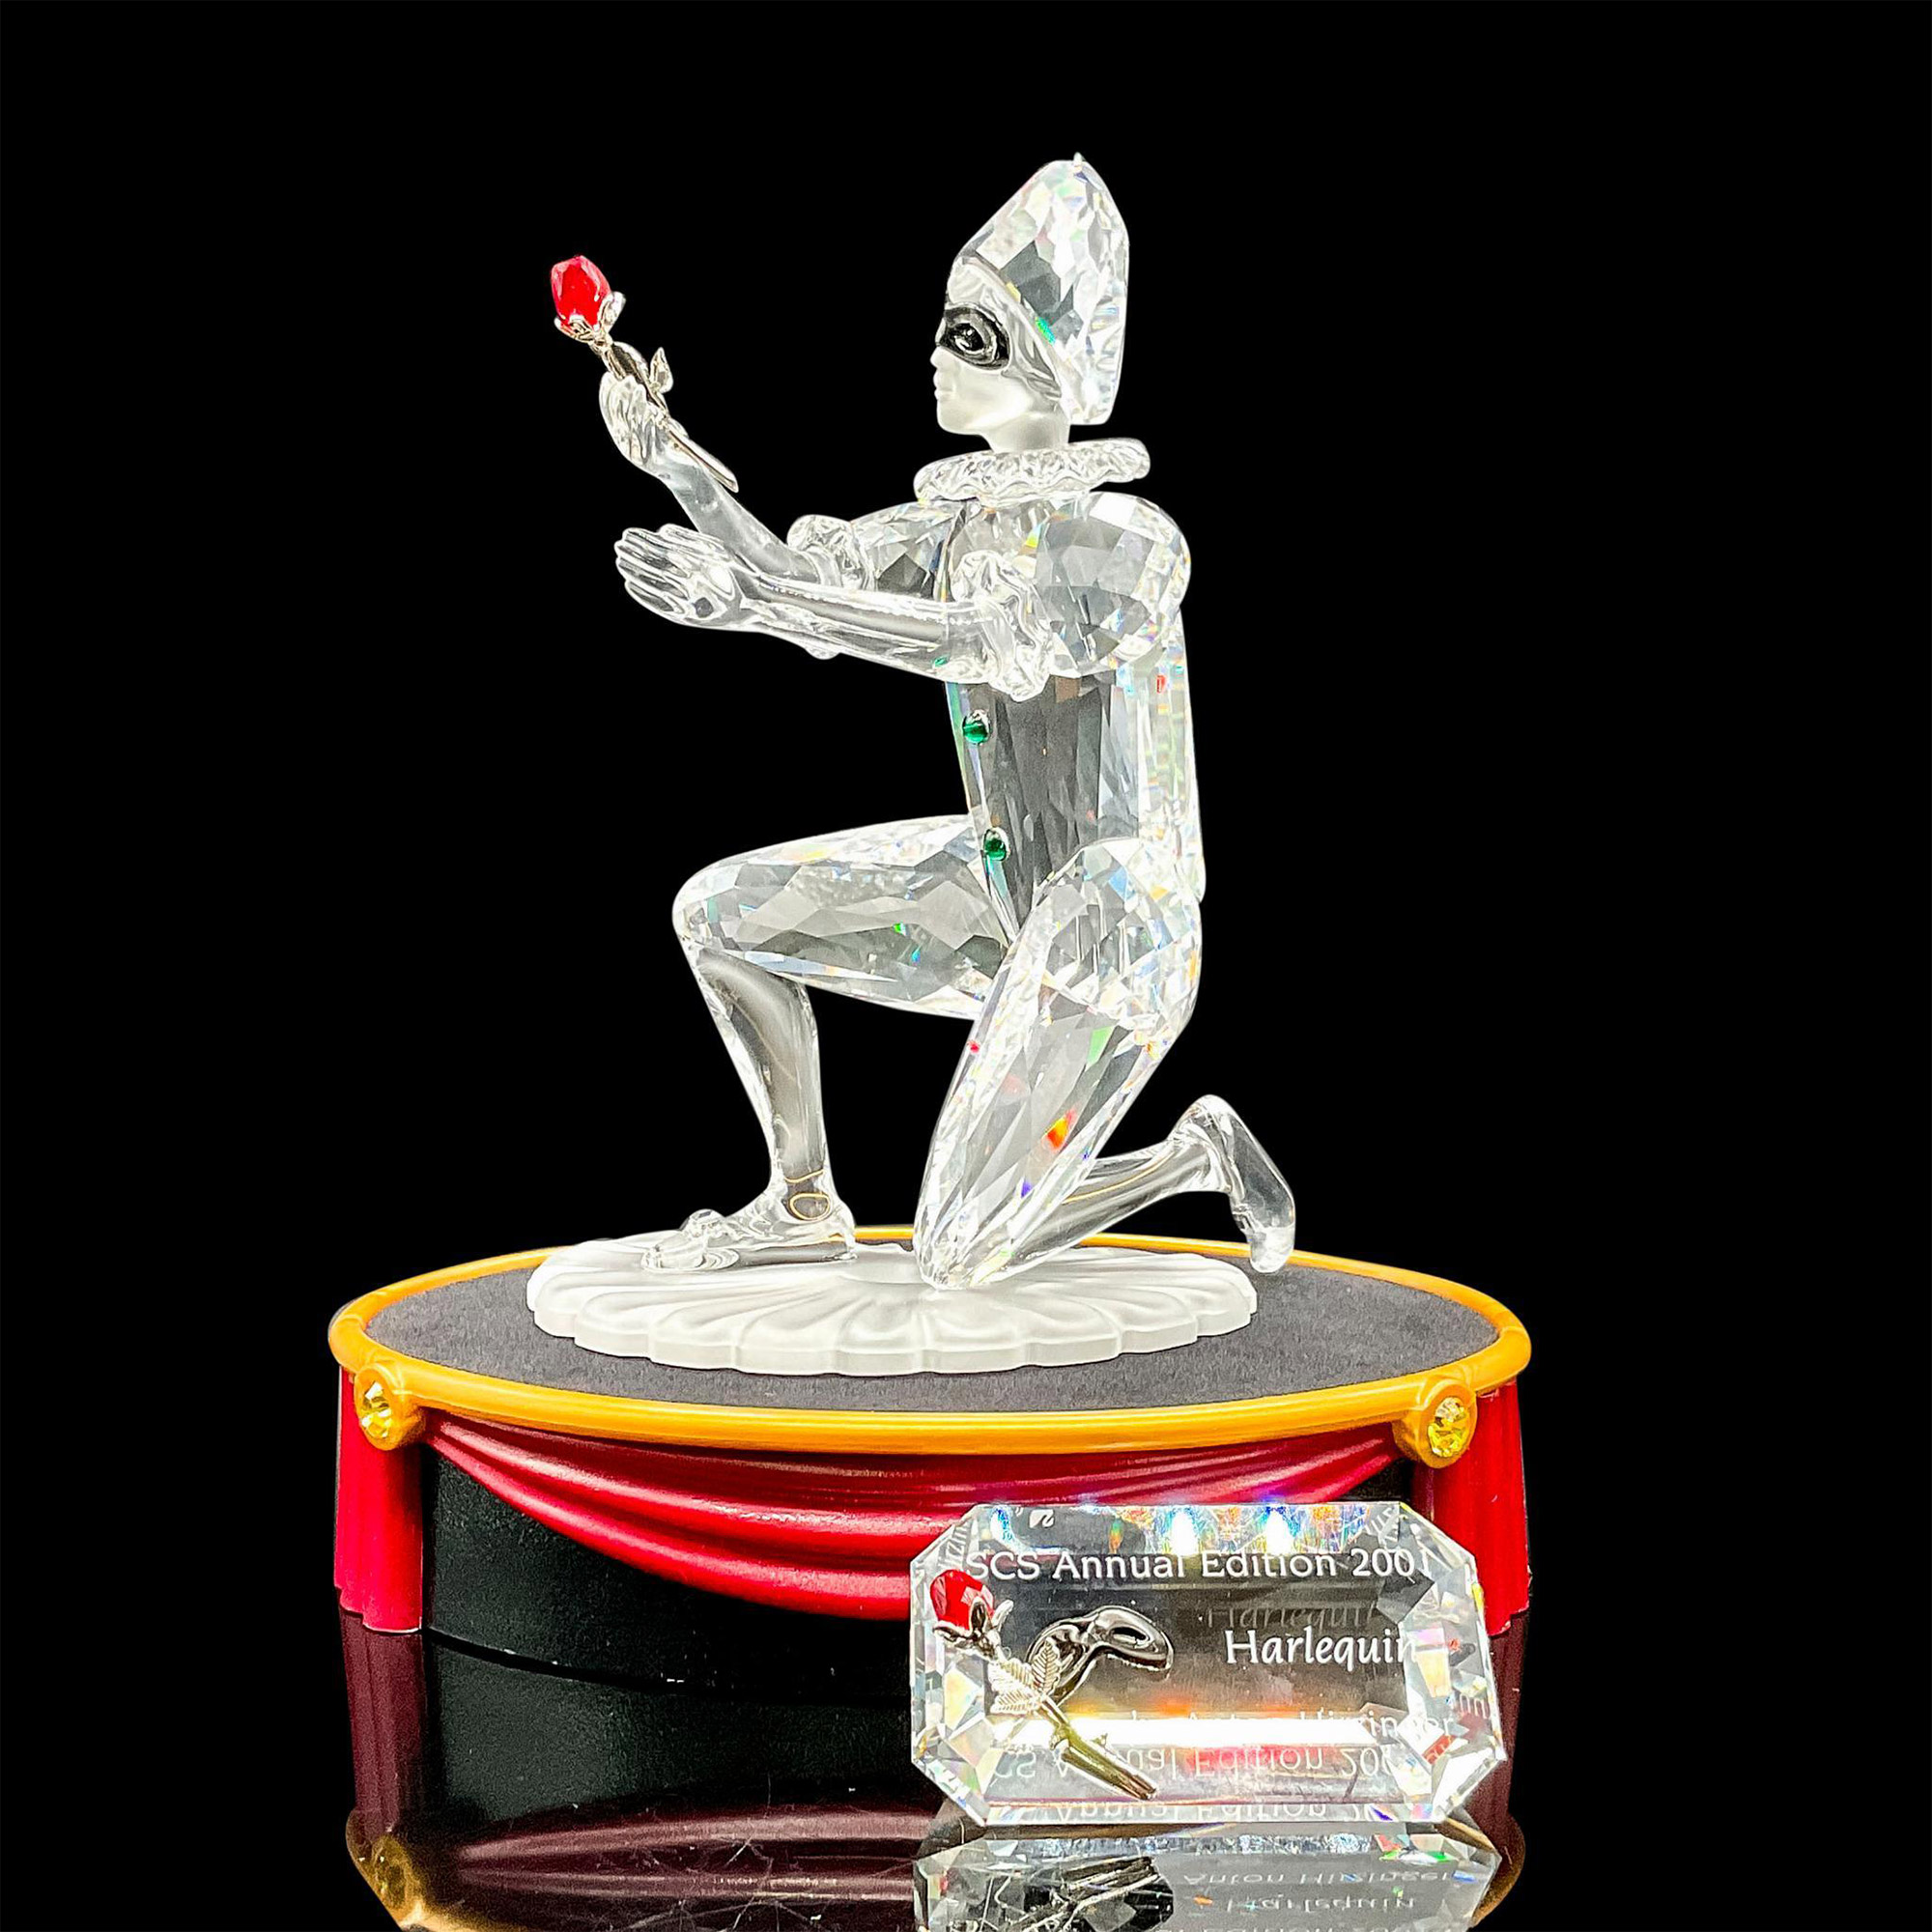 Swarovski Crystal Figurines, Harlequin